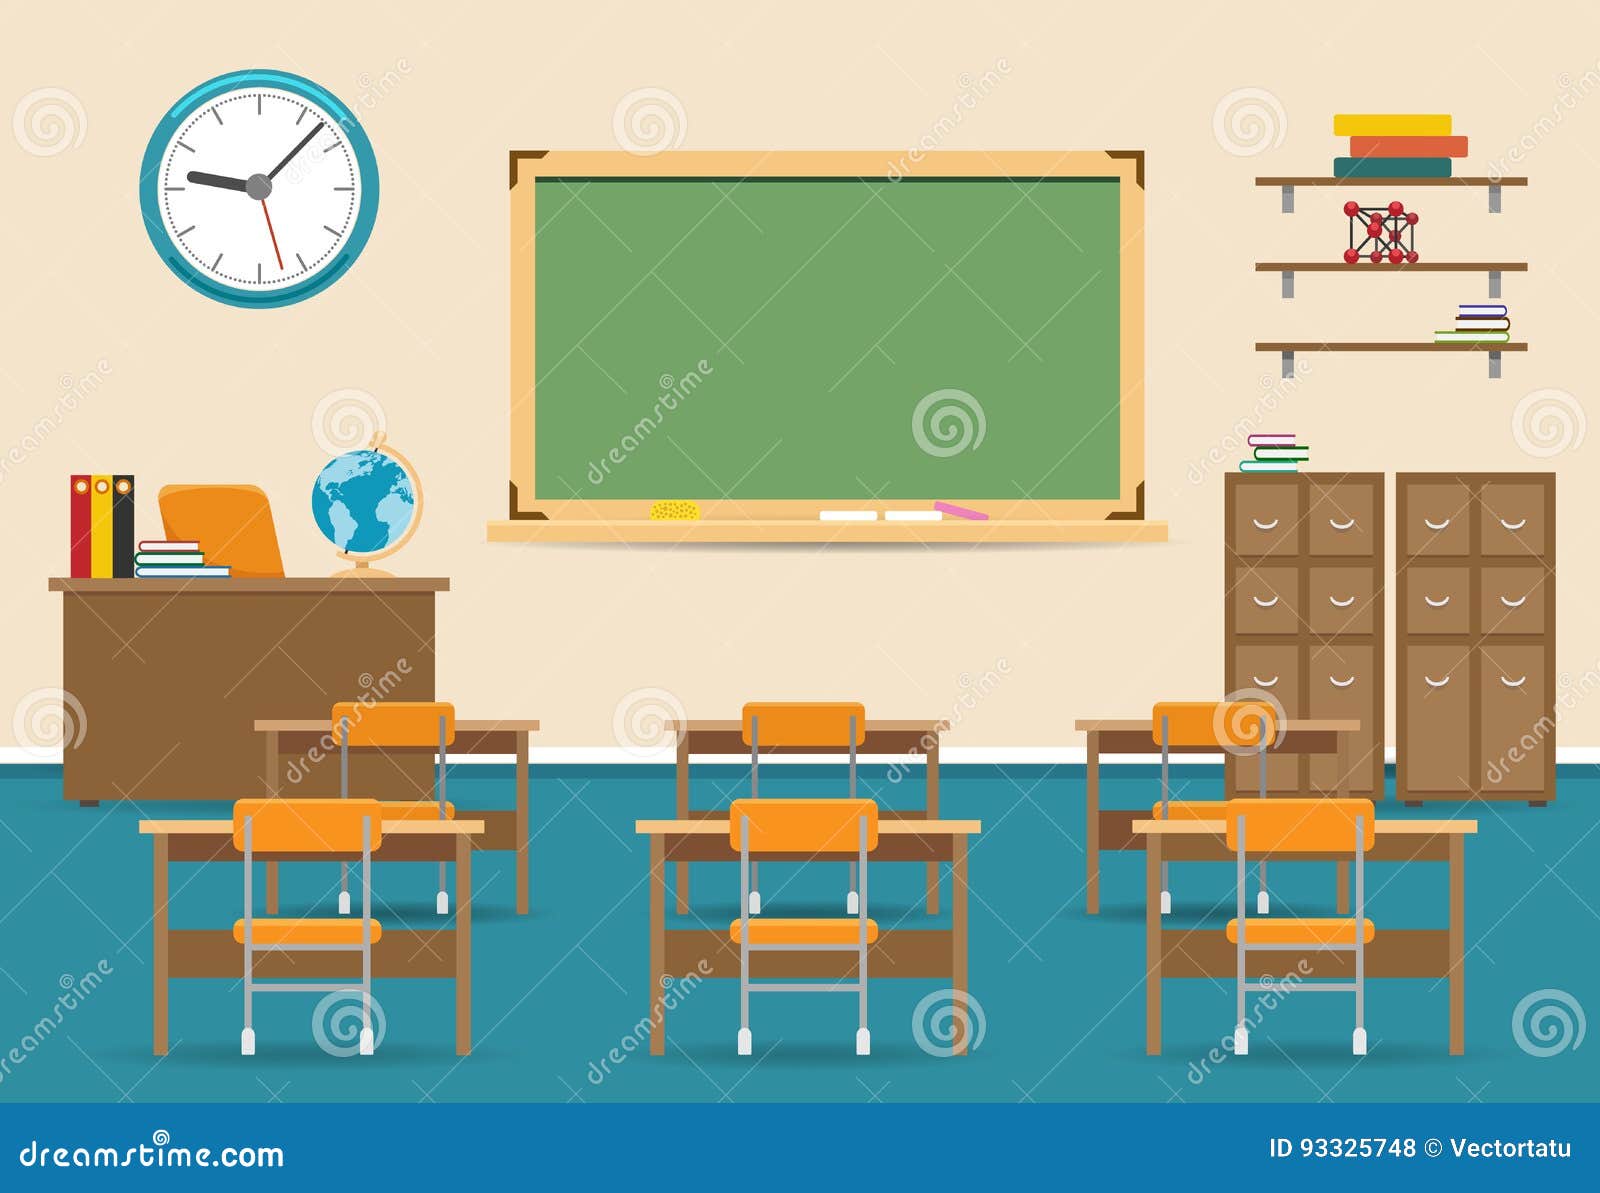 empty classroom interior with blackboard